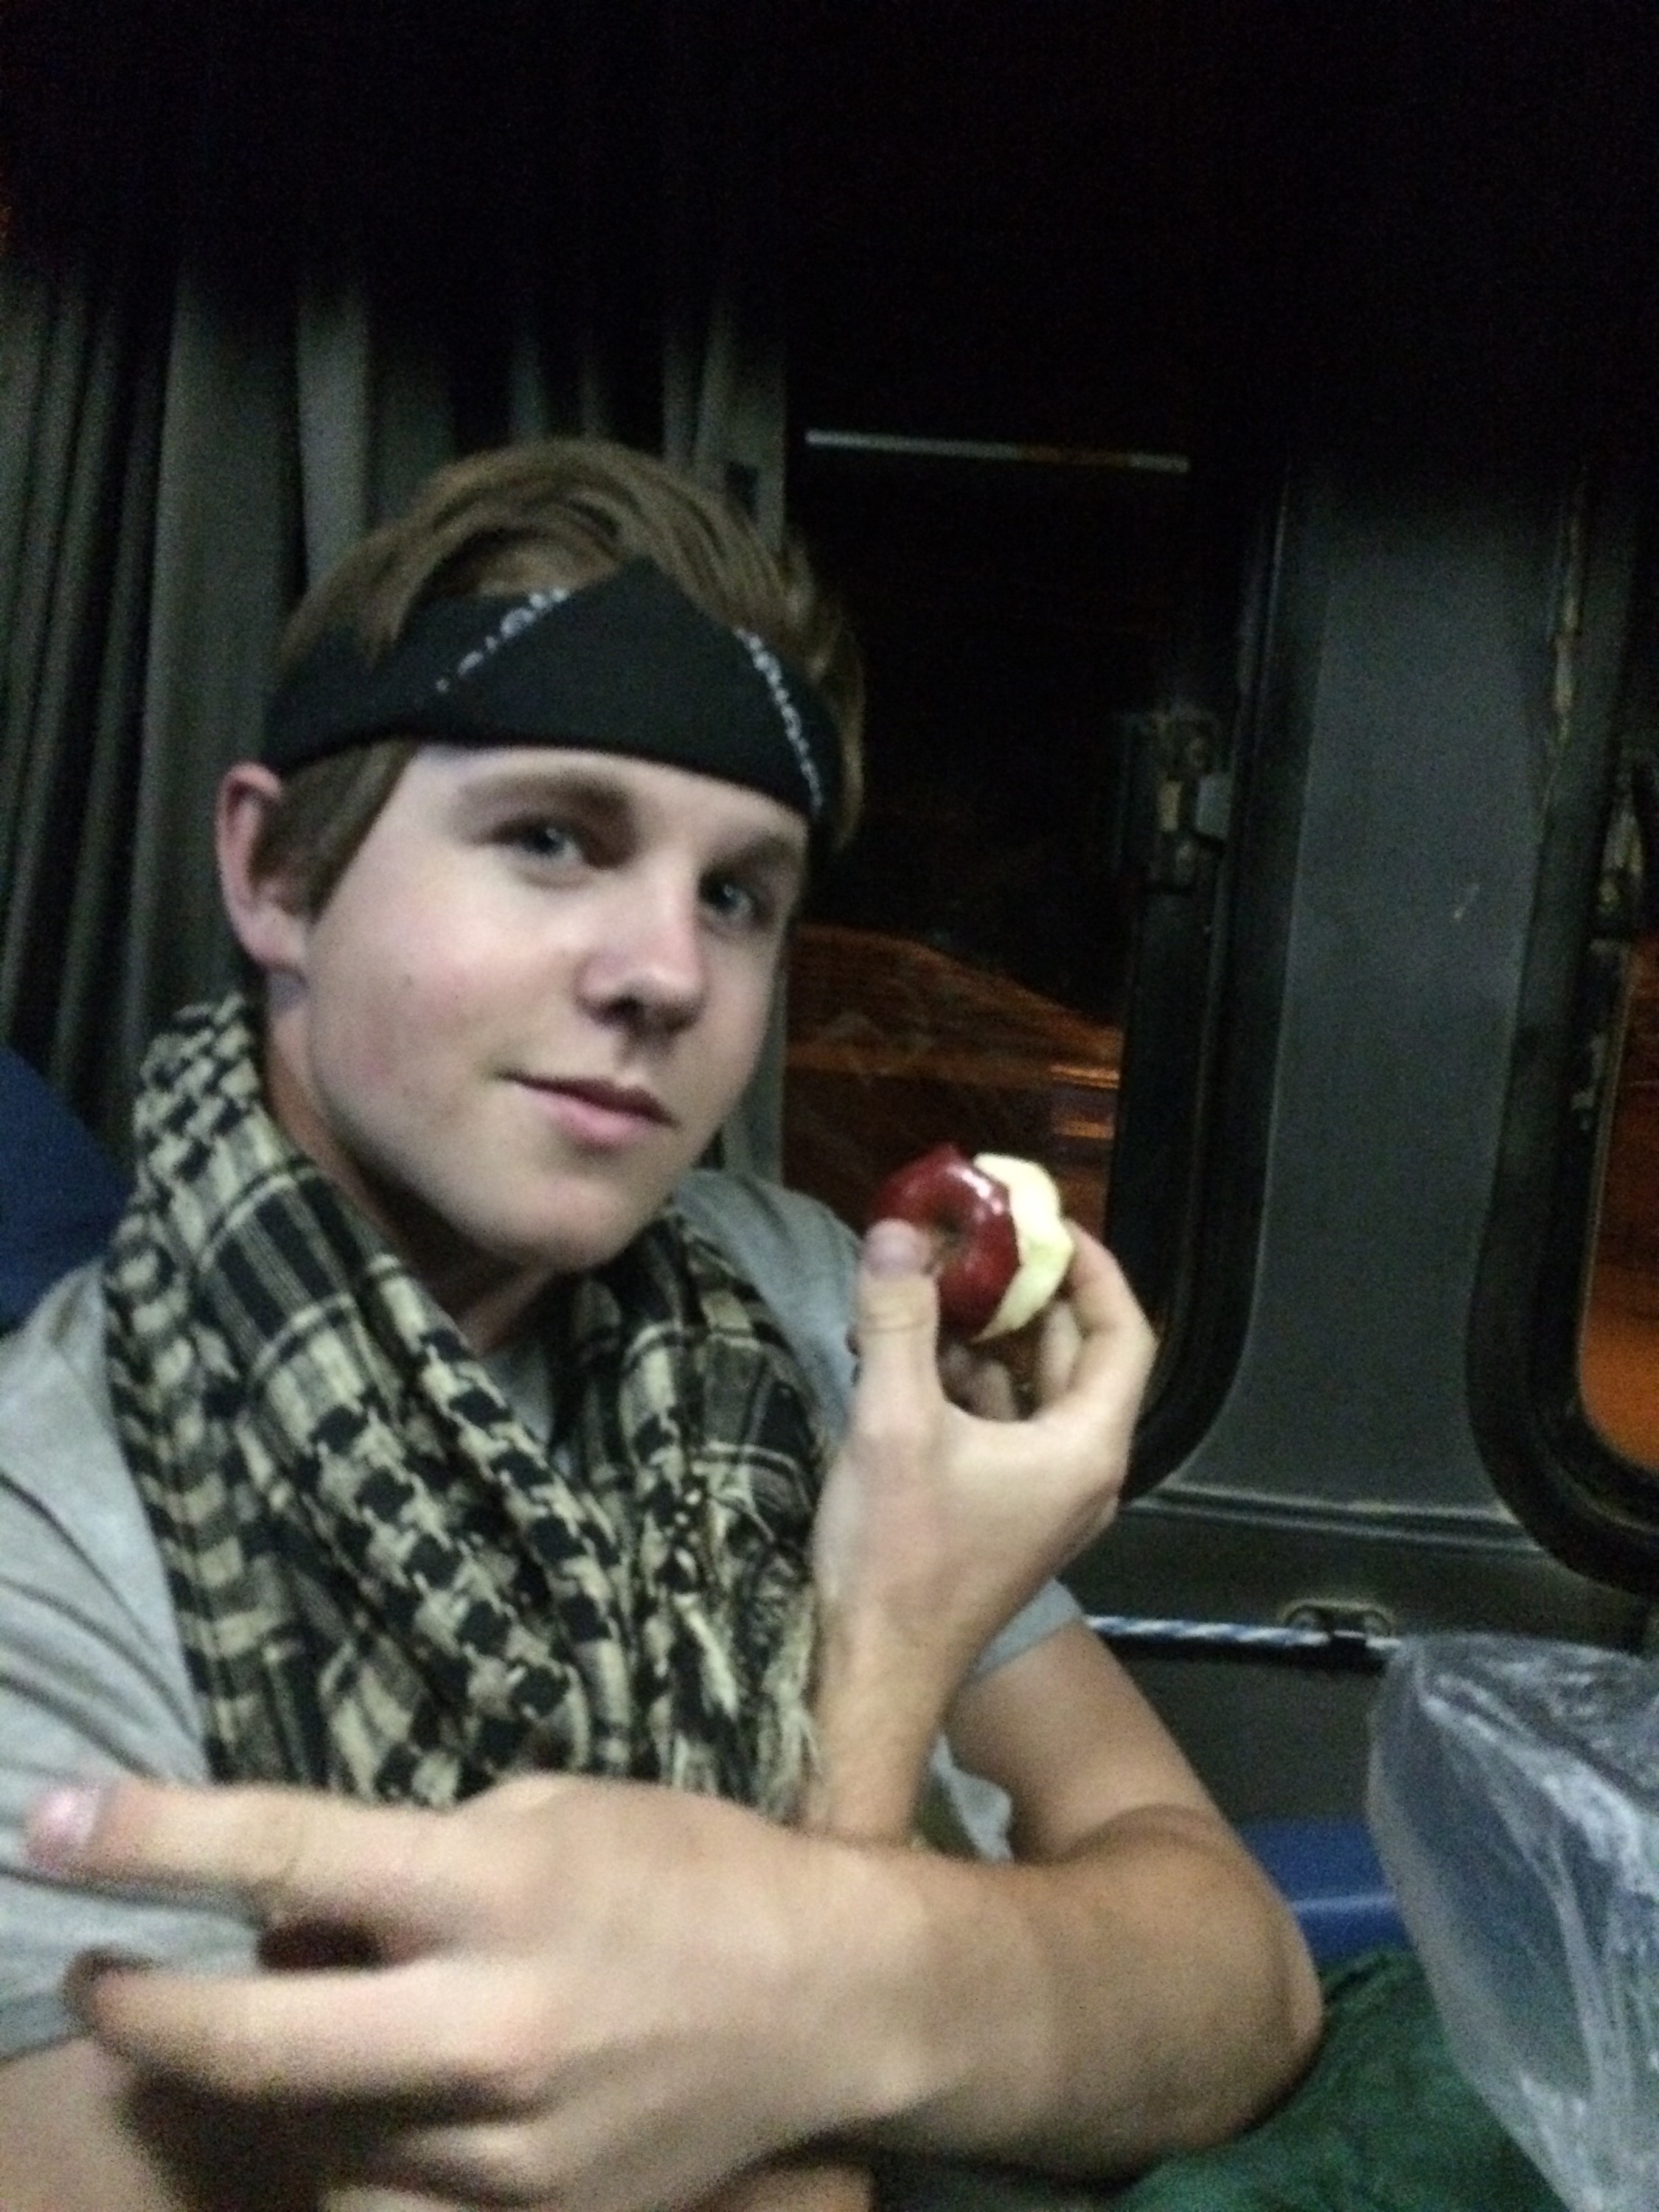 Peter eating an apple